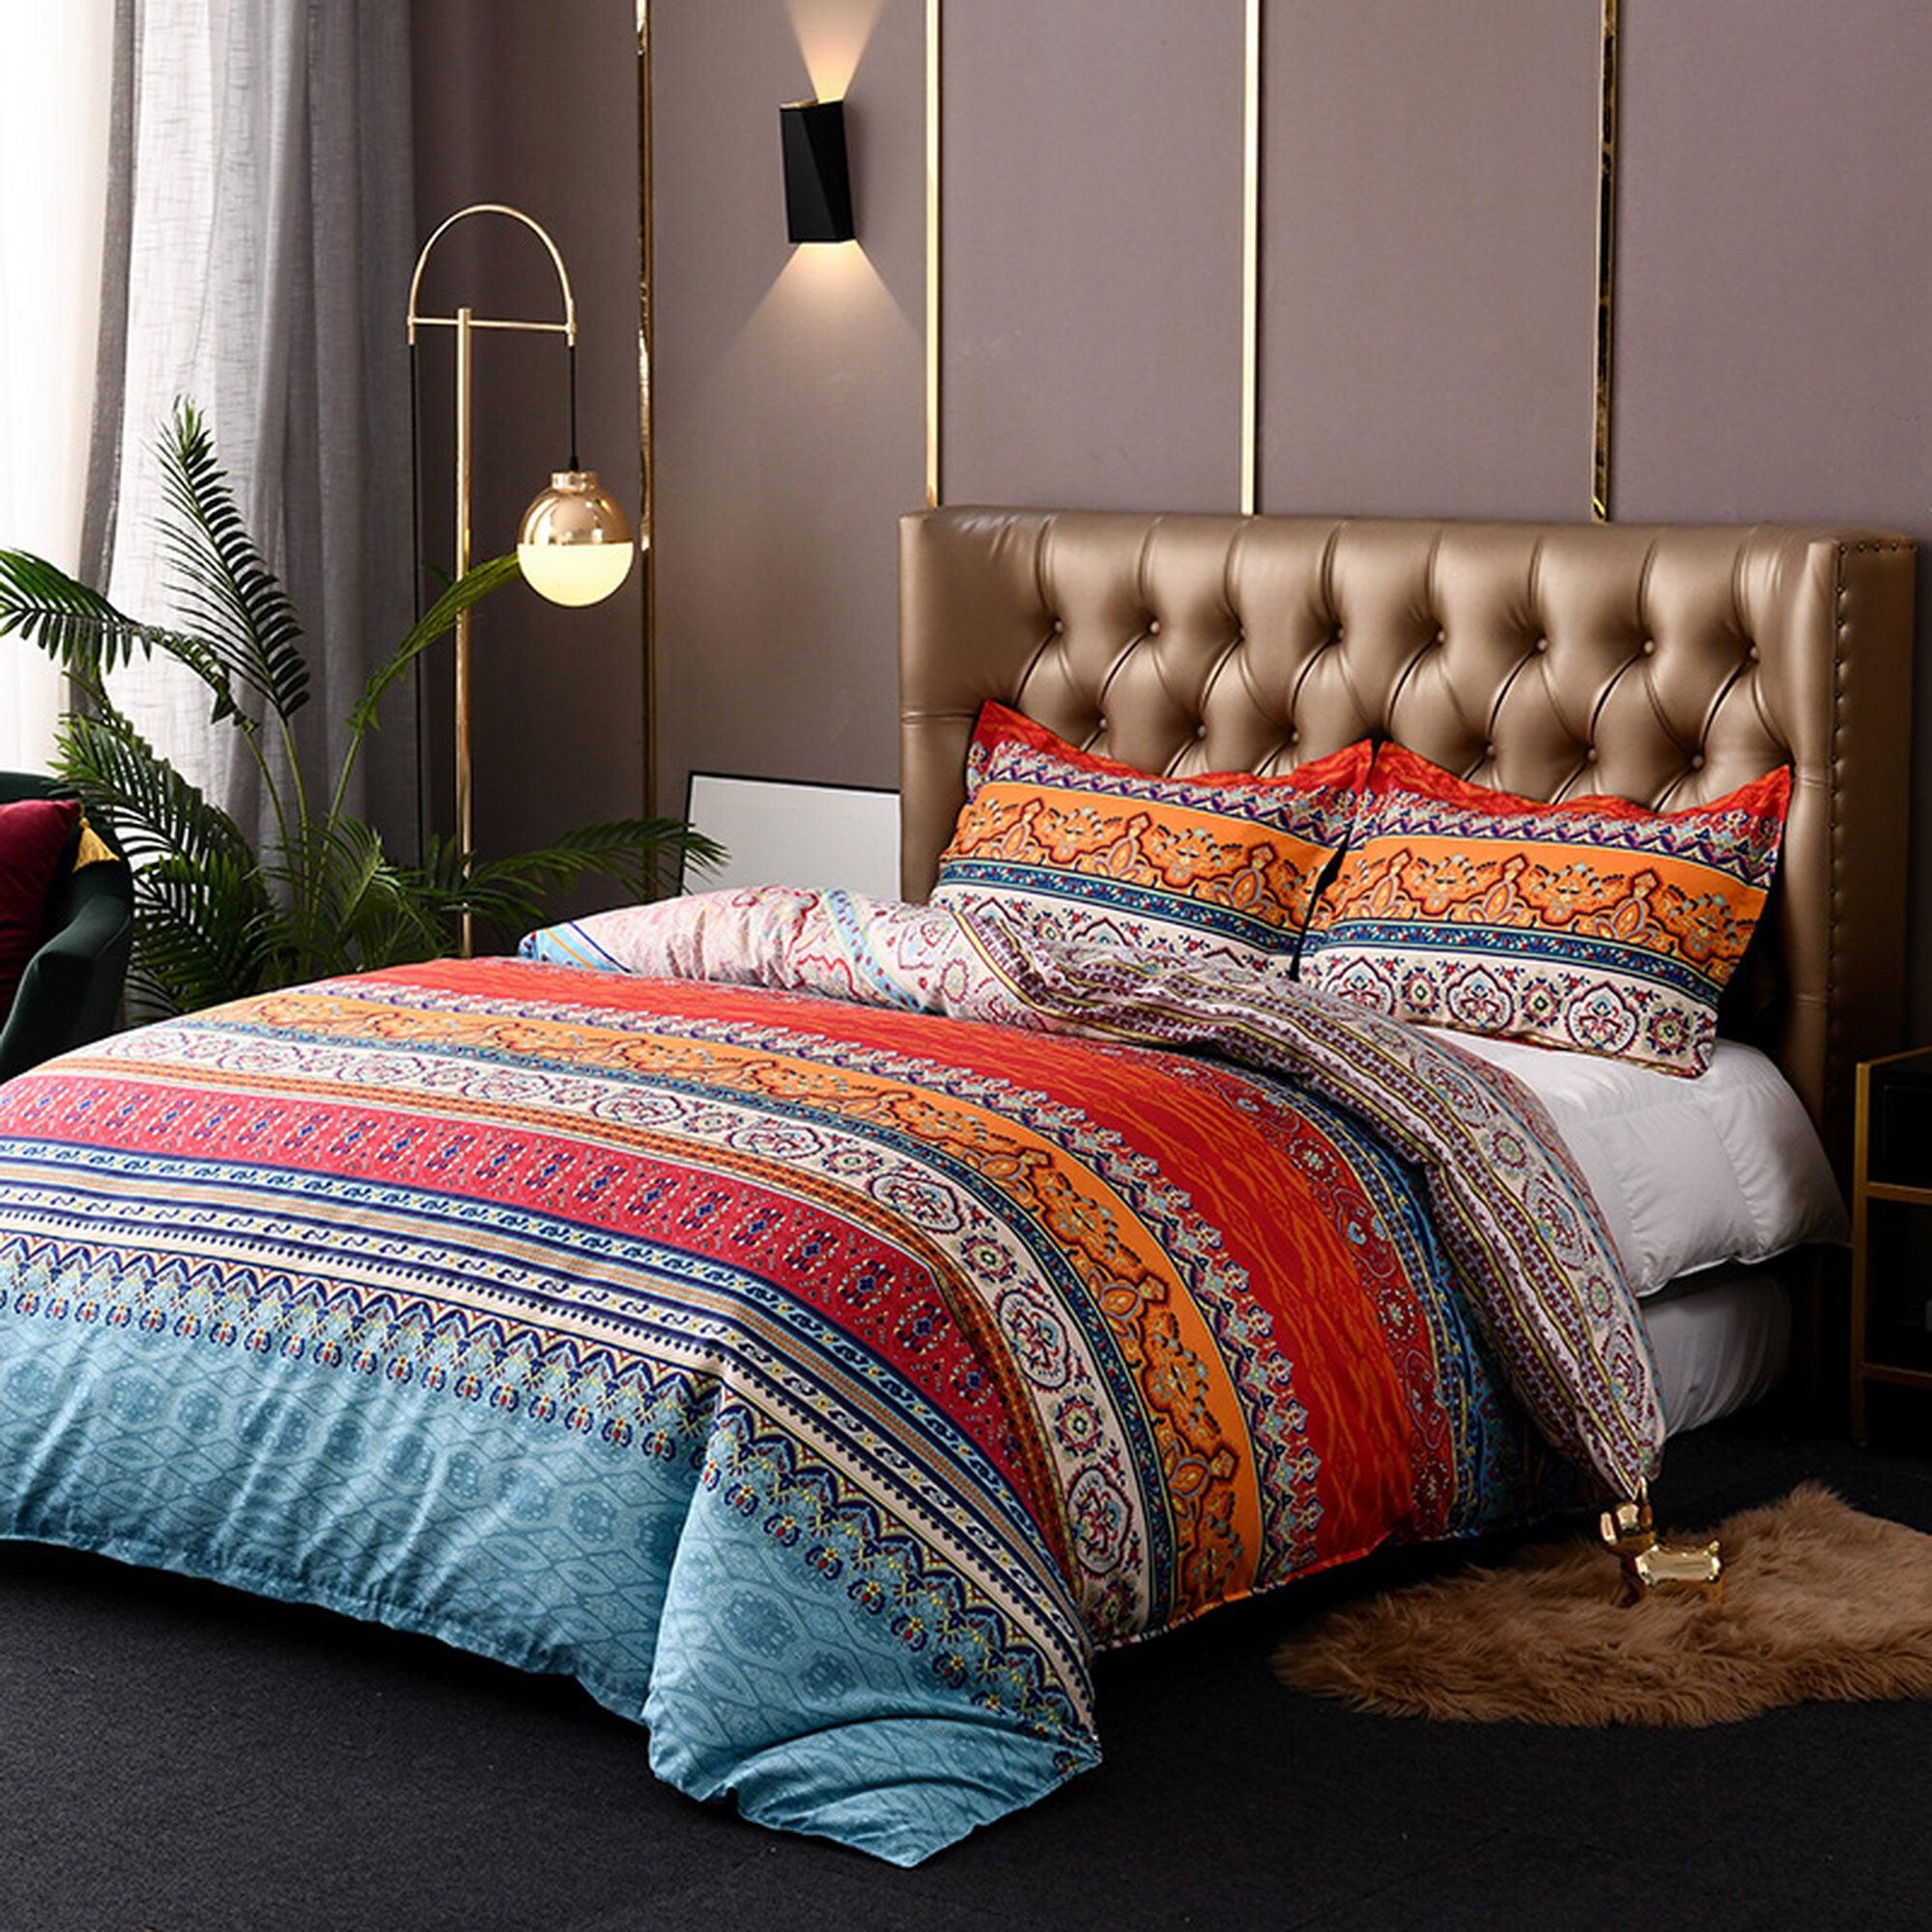 daintyduvet Bohemian Colorful Duvet Cover Set Boho Bedding, Hippie Dorm Bedding with Pillowcase